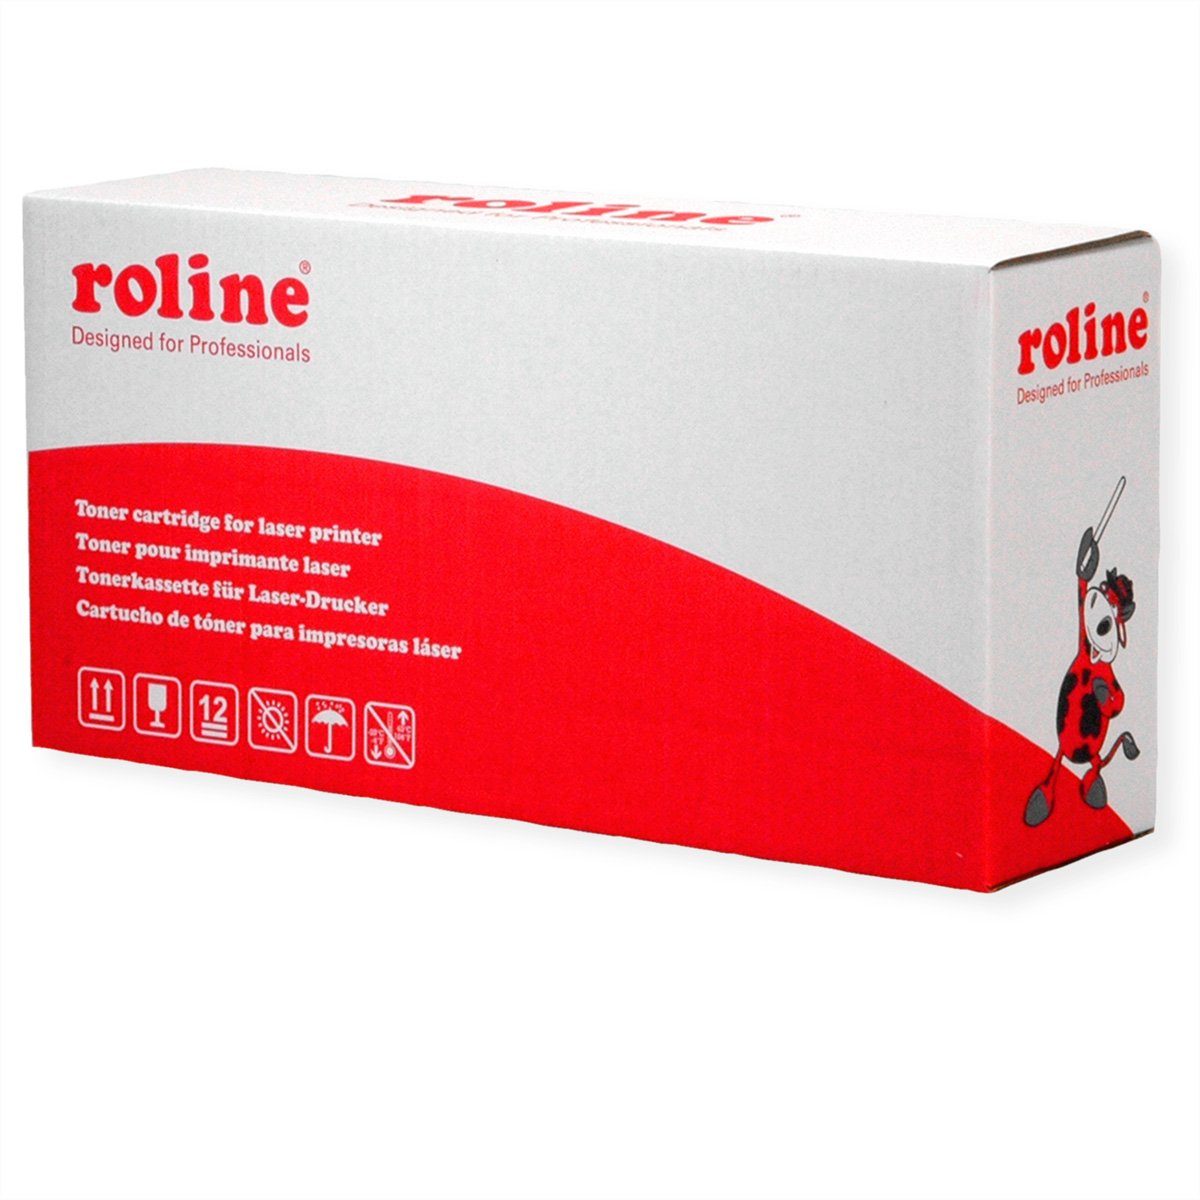 ROLINE Tonerkartusche Toner kompatibel zu CE412A, Nr.305a, für HP CLJ Pro400 M451, ca. 2.600 Seiten